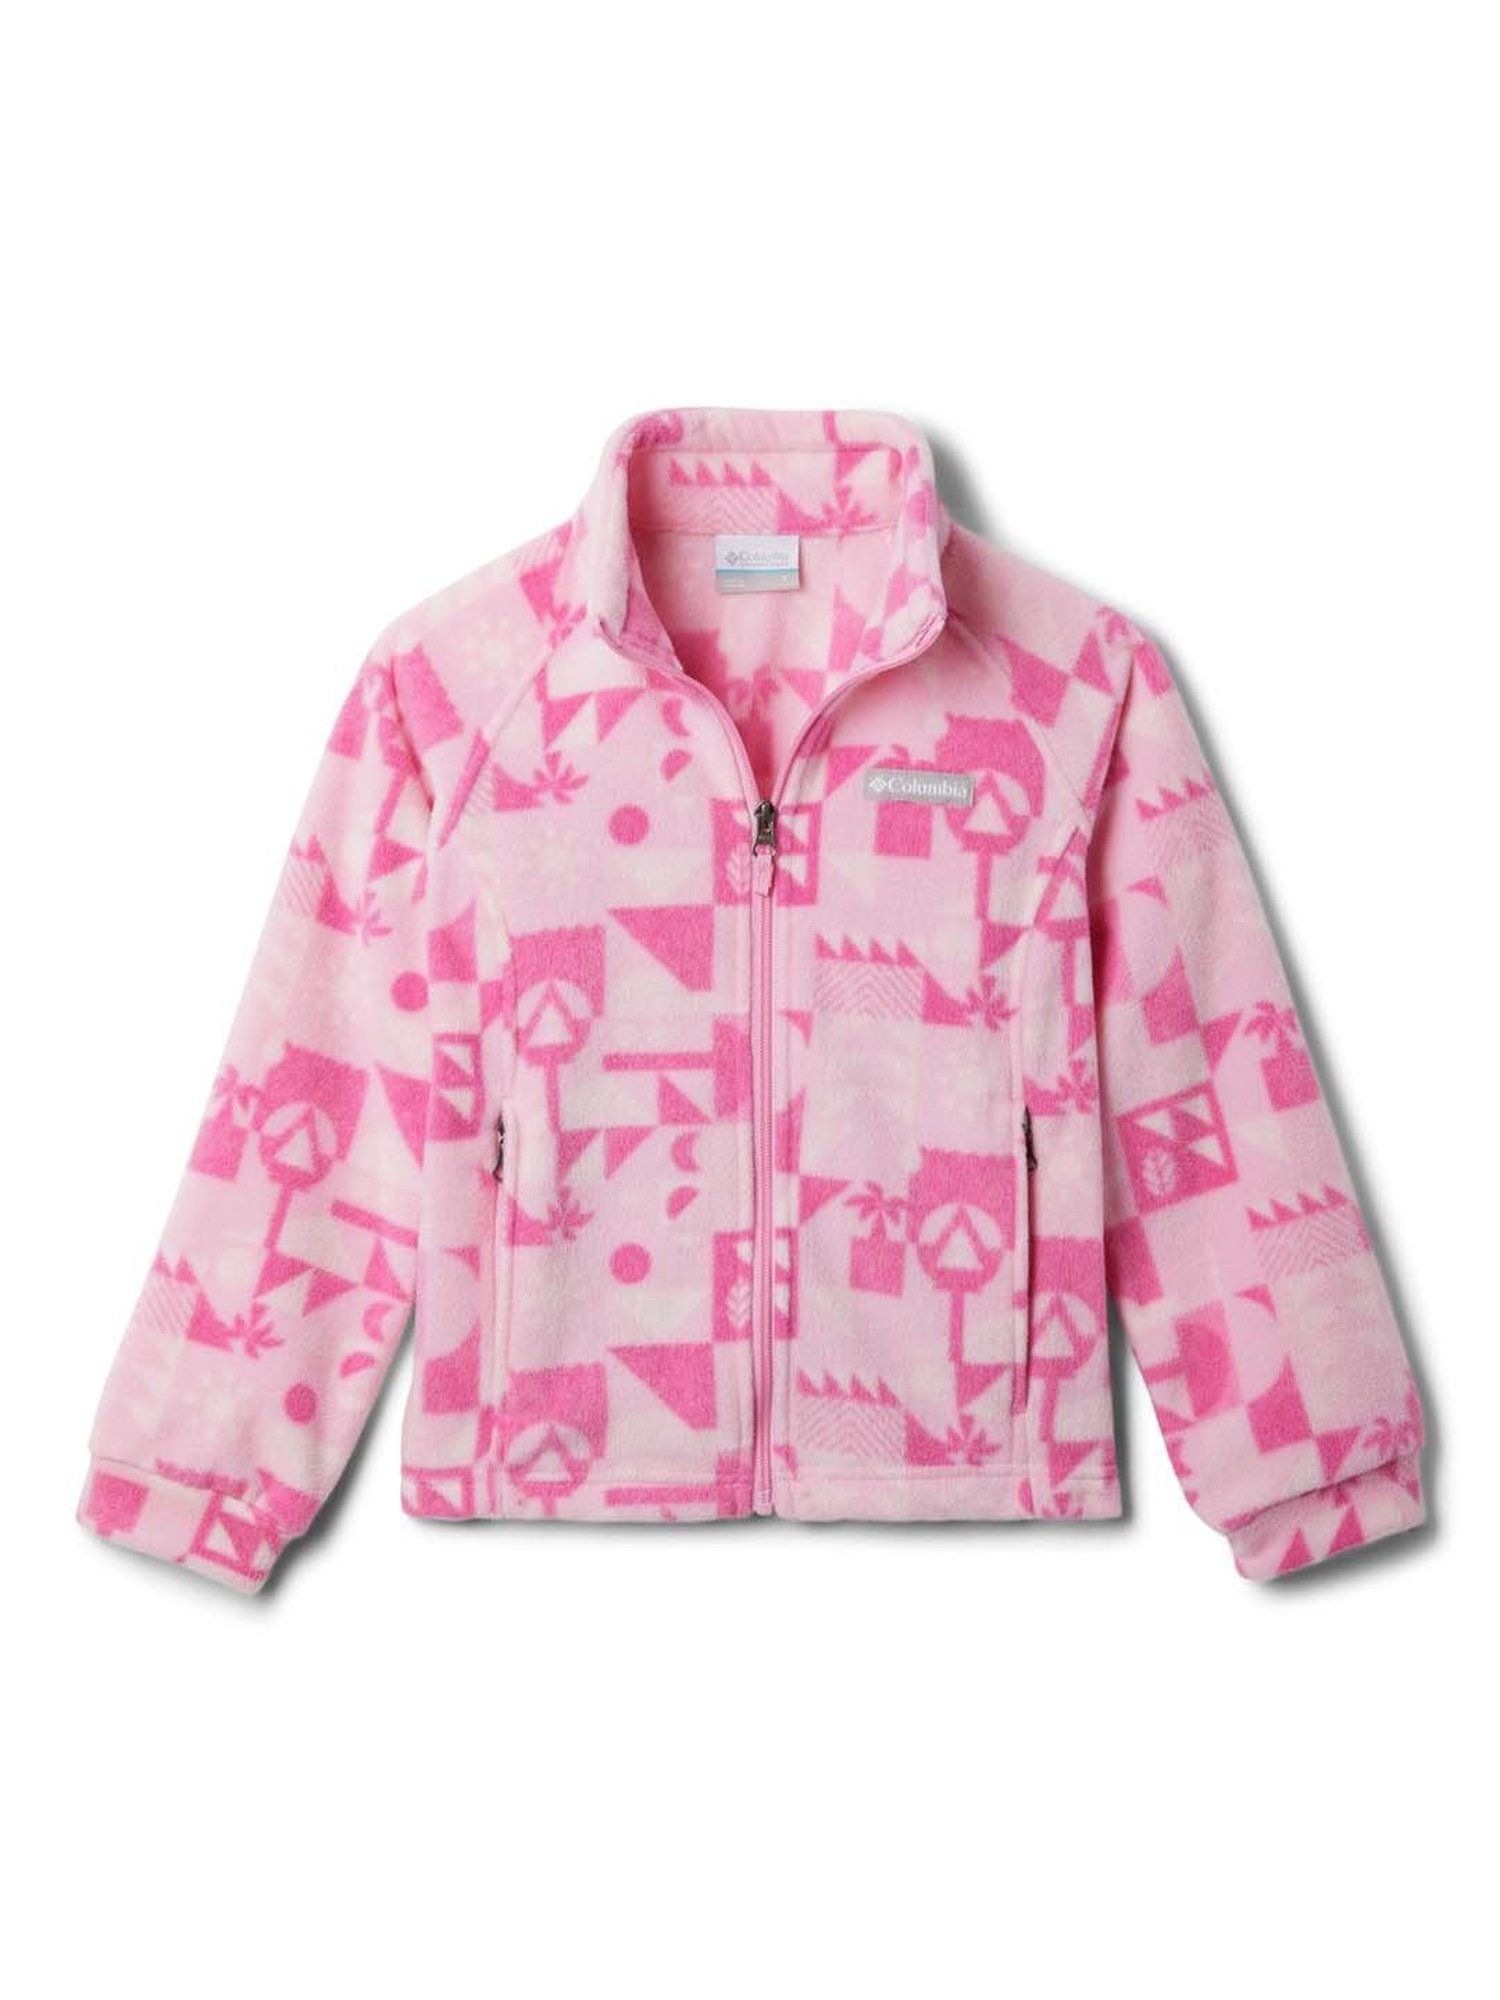 Grease Plus Size Pink Ladies Costume Jacket - Walmart.com